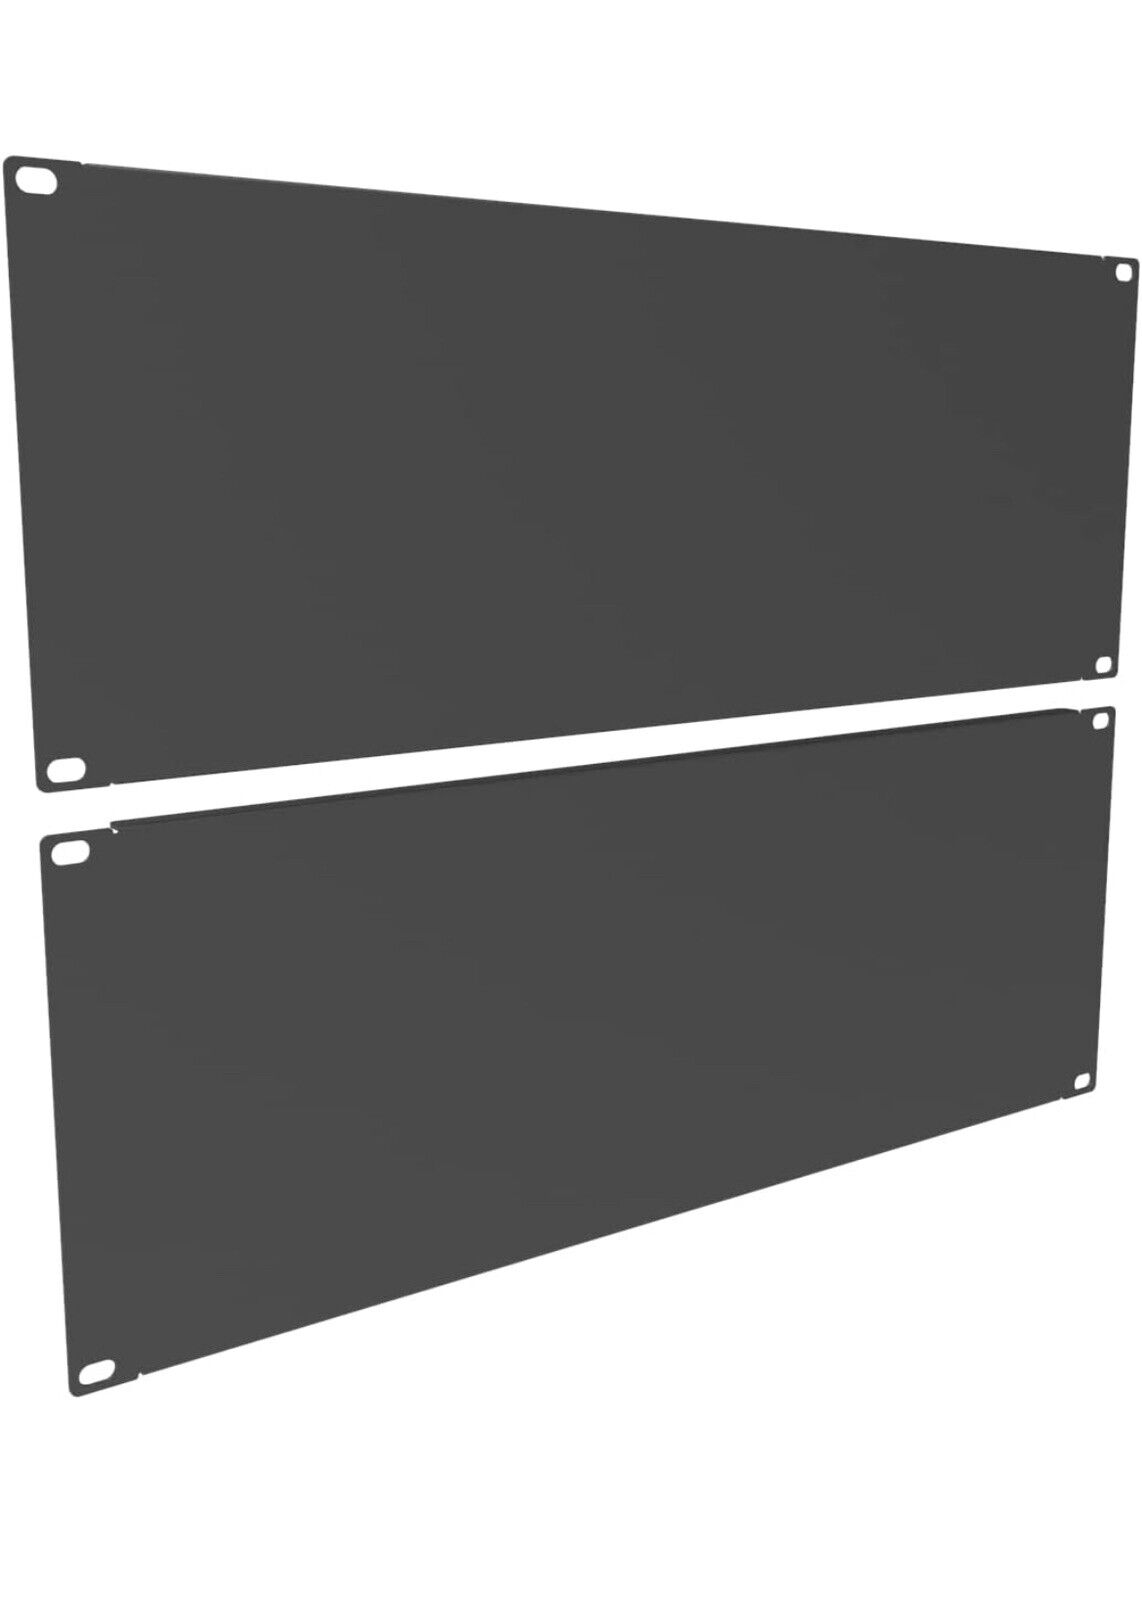 2 Pack of 4U Blank Panel - Metal Server Rack Panel for 19In Server Rack Cabinet